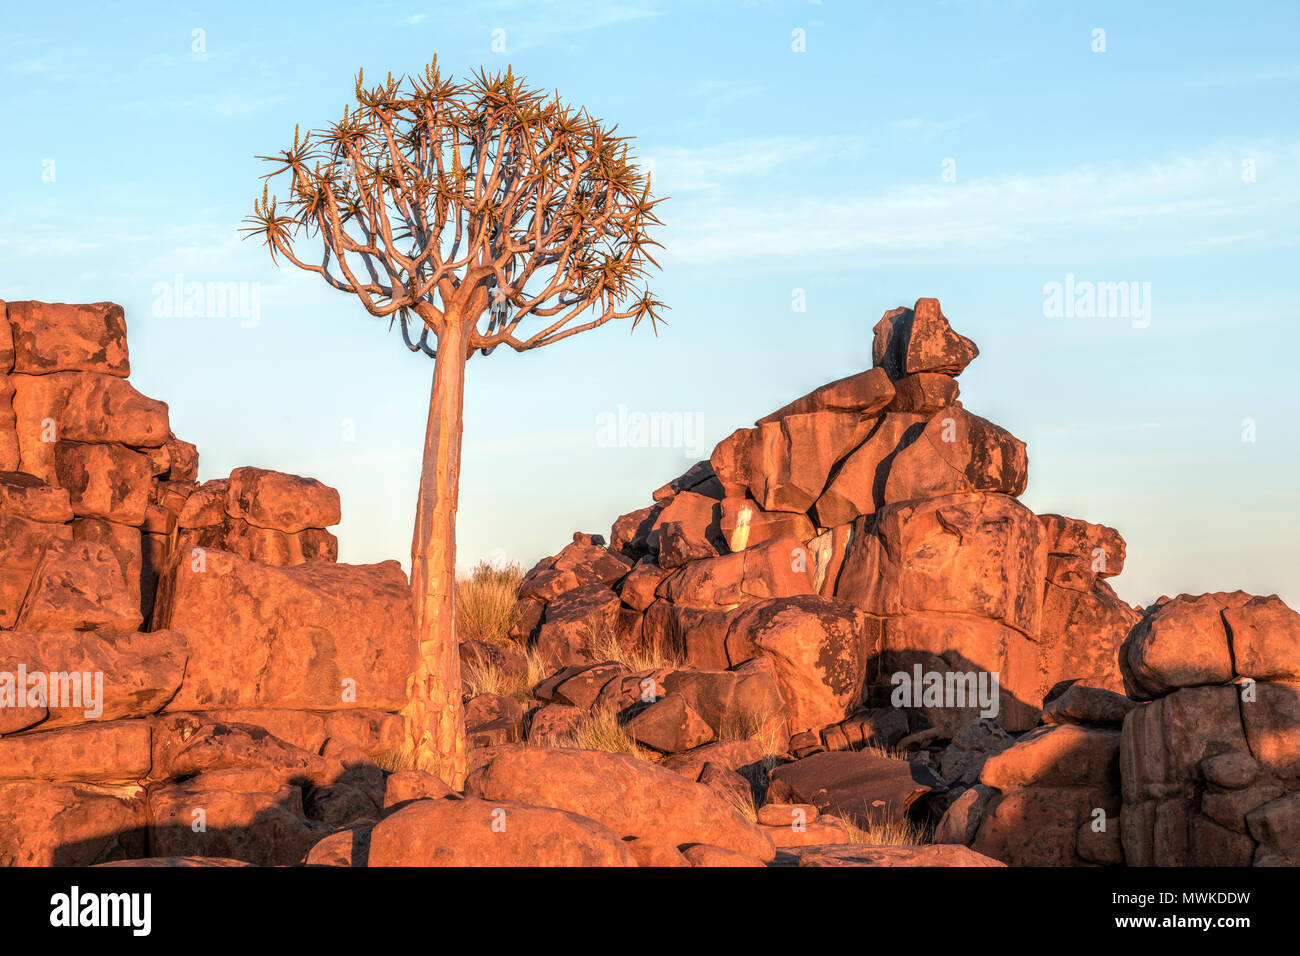 Quiver Tree Forest, Keetmanshoop, Namibie, Afrique du Sud Banque D'Images